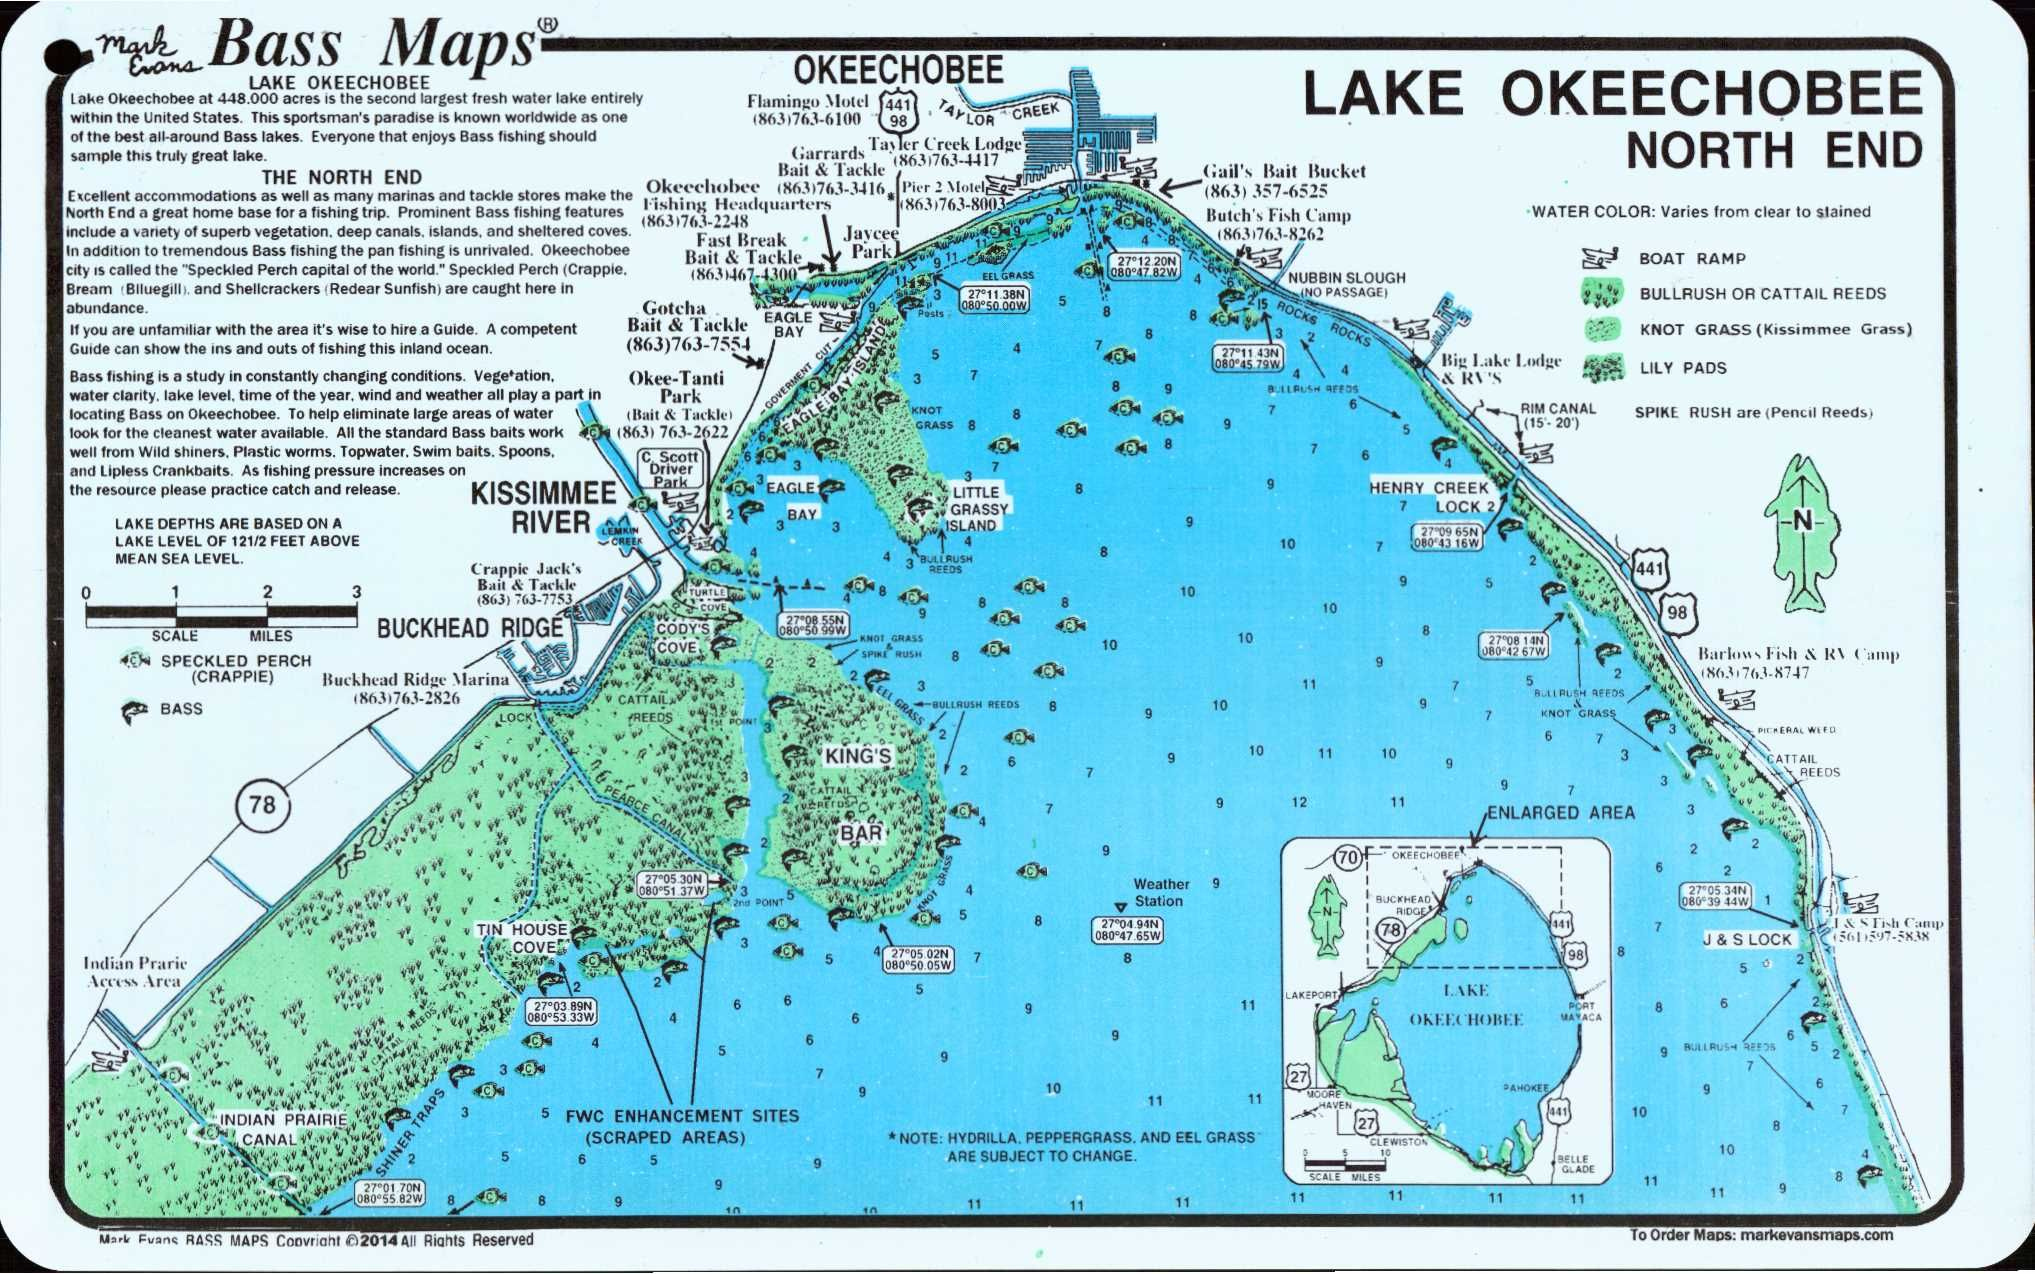 Lake Okeechobee North End Lakeport Area Bass Map 2 sided 